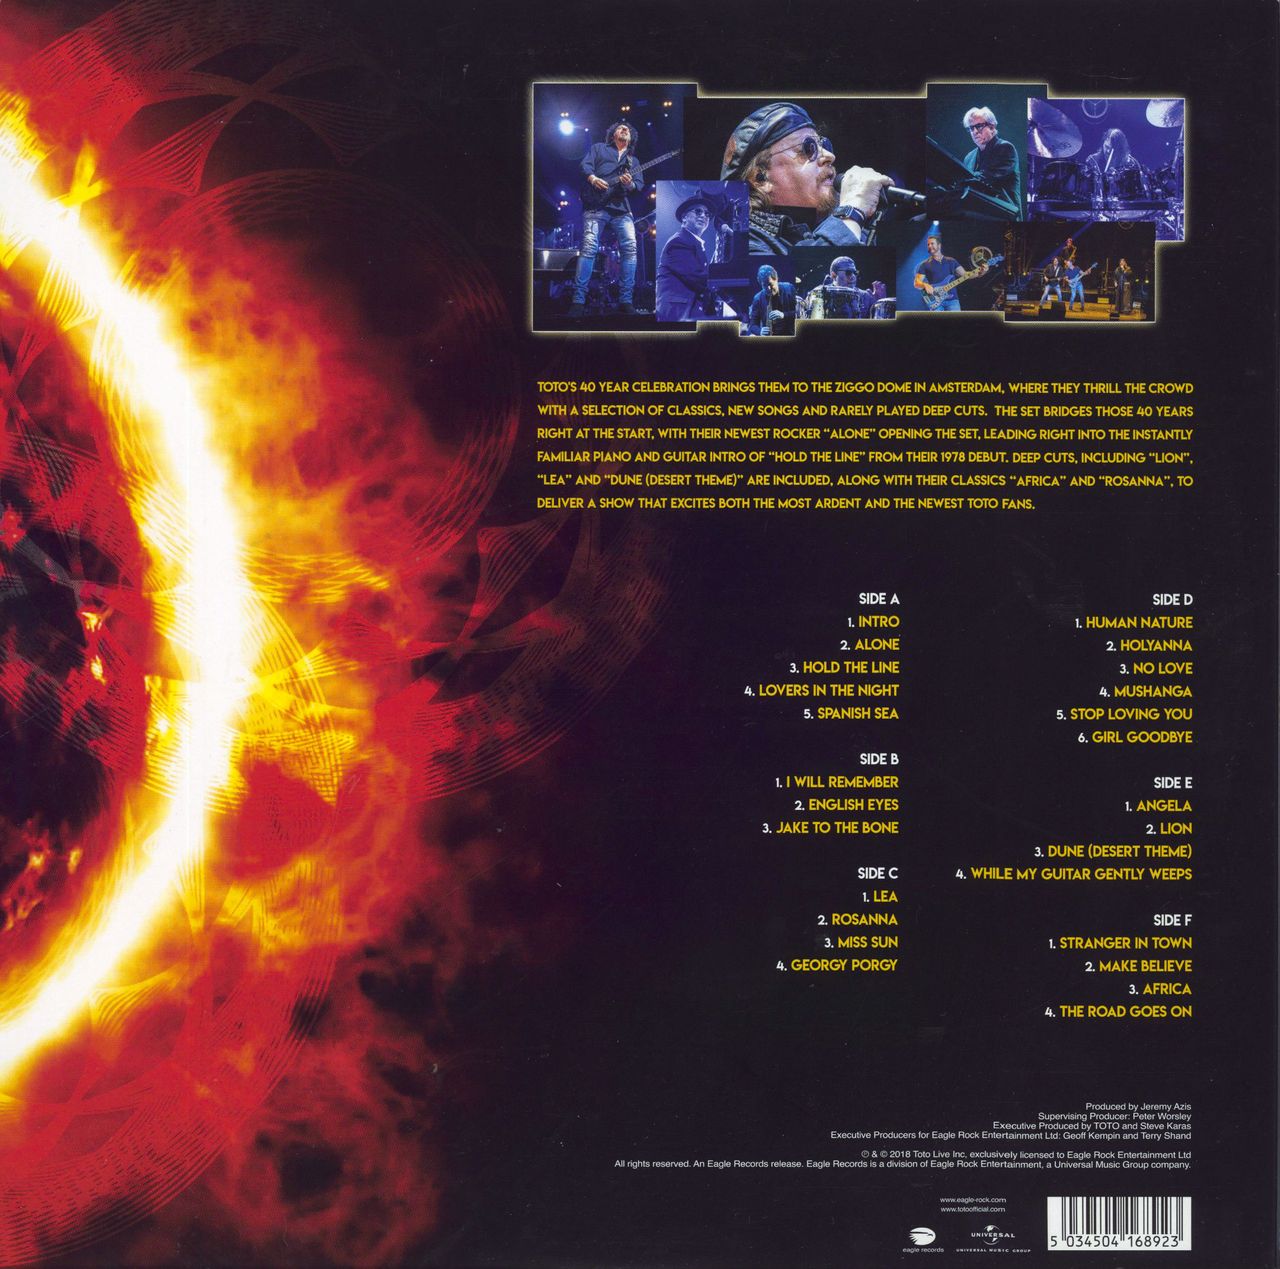 ventilation Afskedige bagværk Toto 40 Tours Around The Sun - 180gm Orange Vinyl UK 3-LP vinyl set —  RareVinyl.com